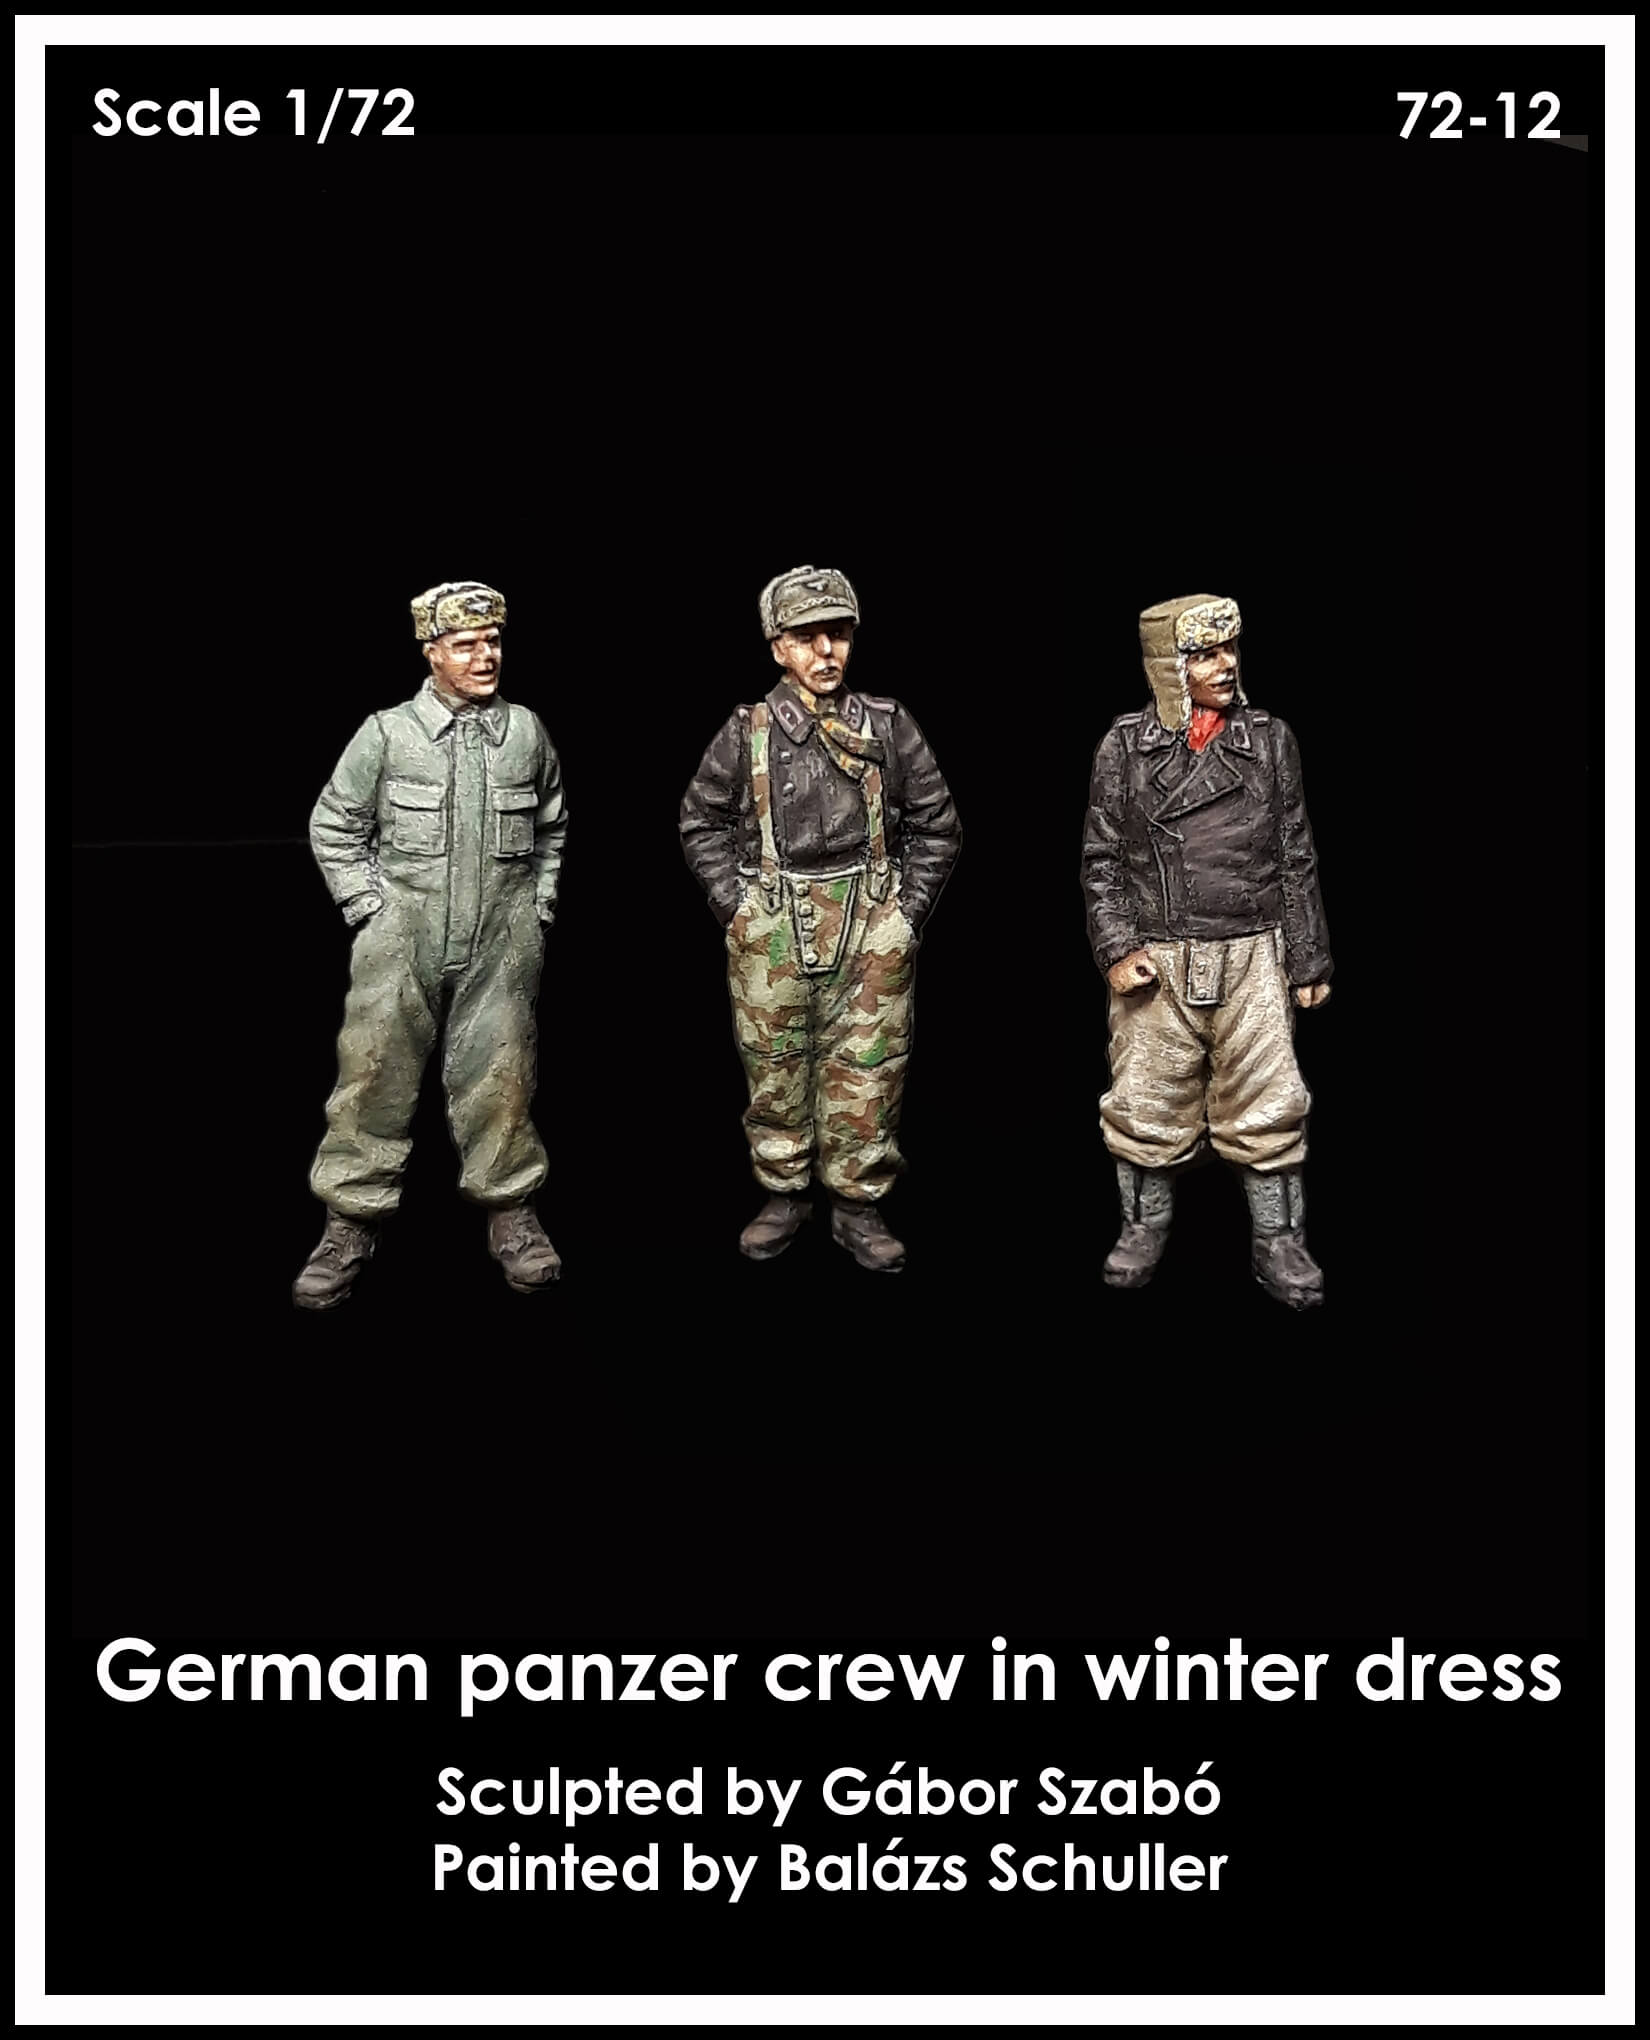 German Crew